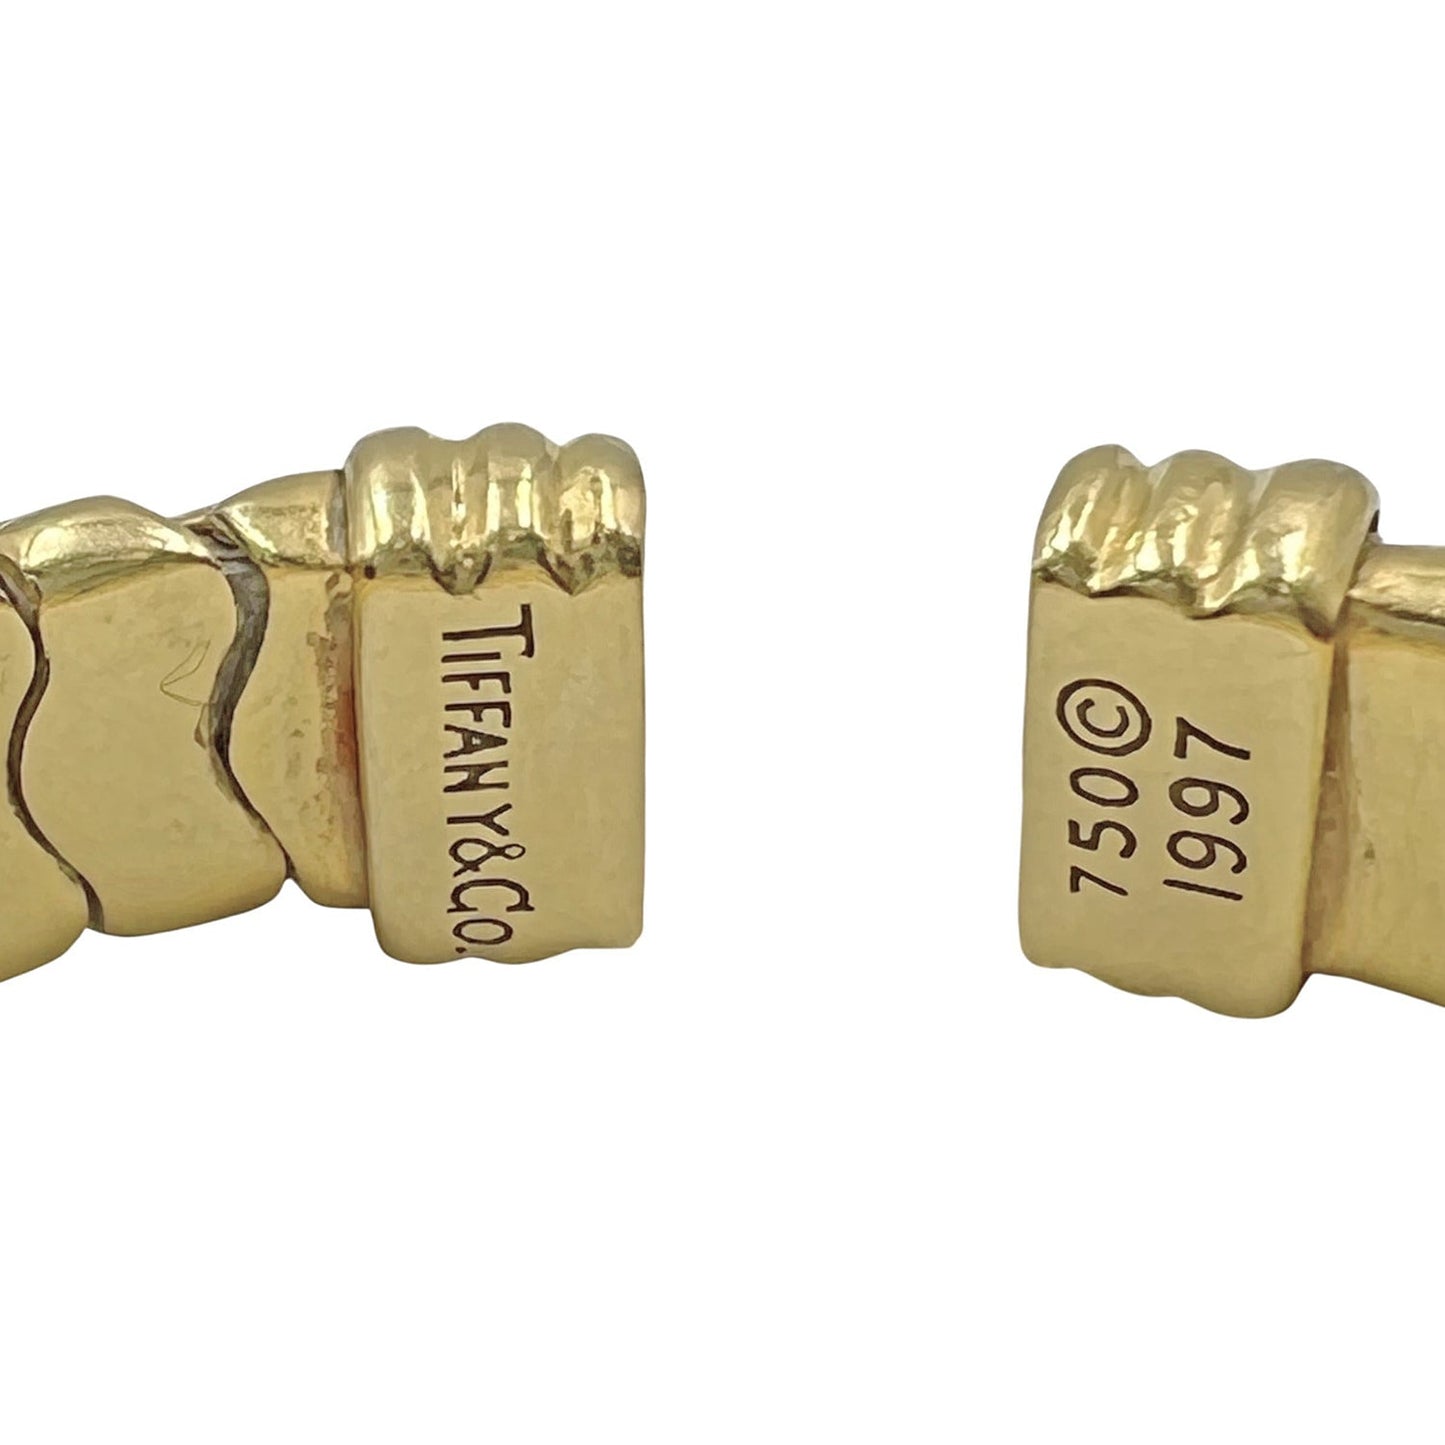 Tiffany & Co - 18k Yellow Gold Vannerie Cuff Bracelet